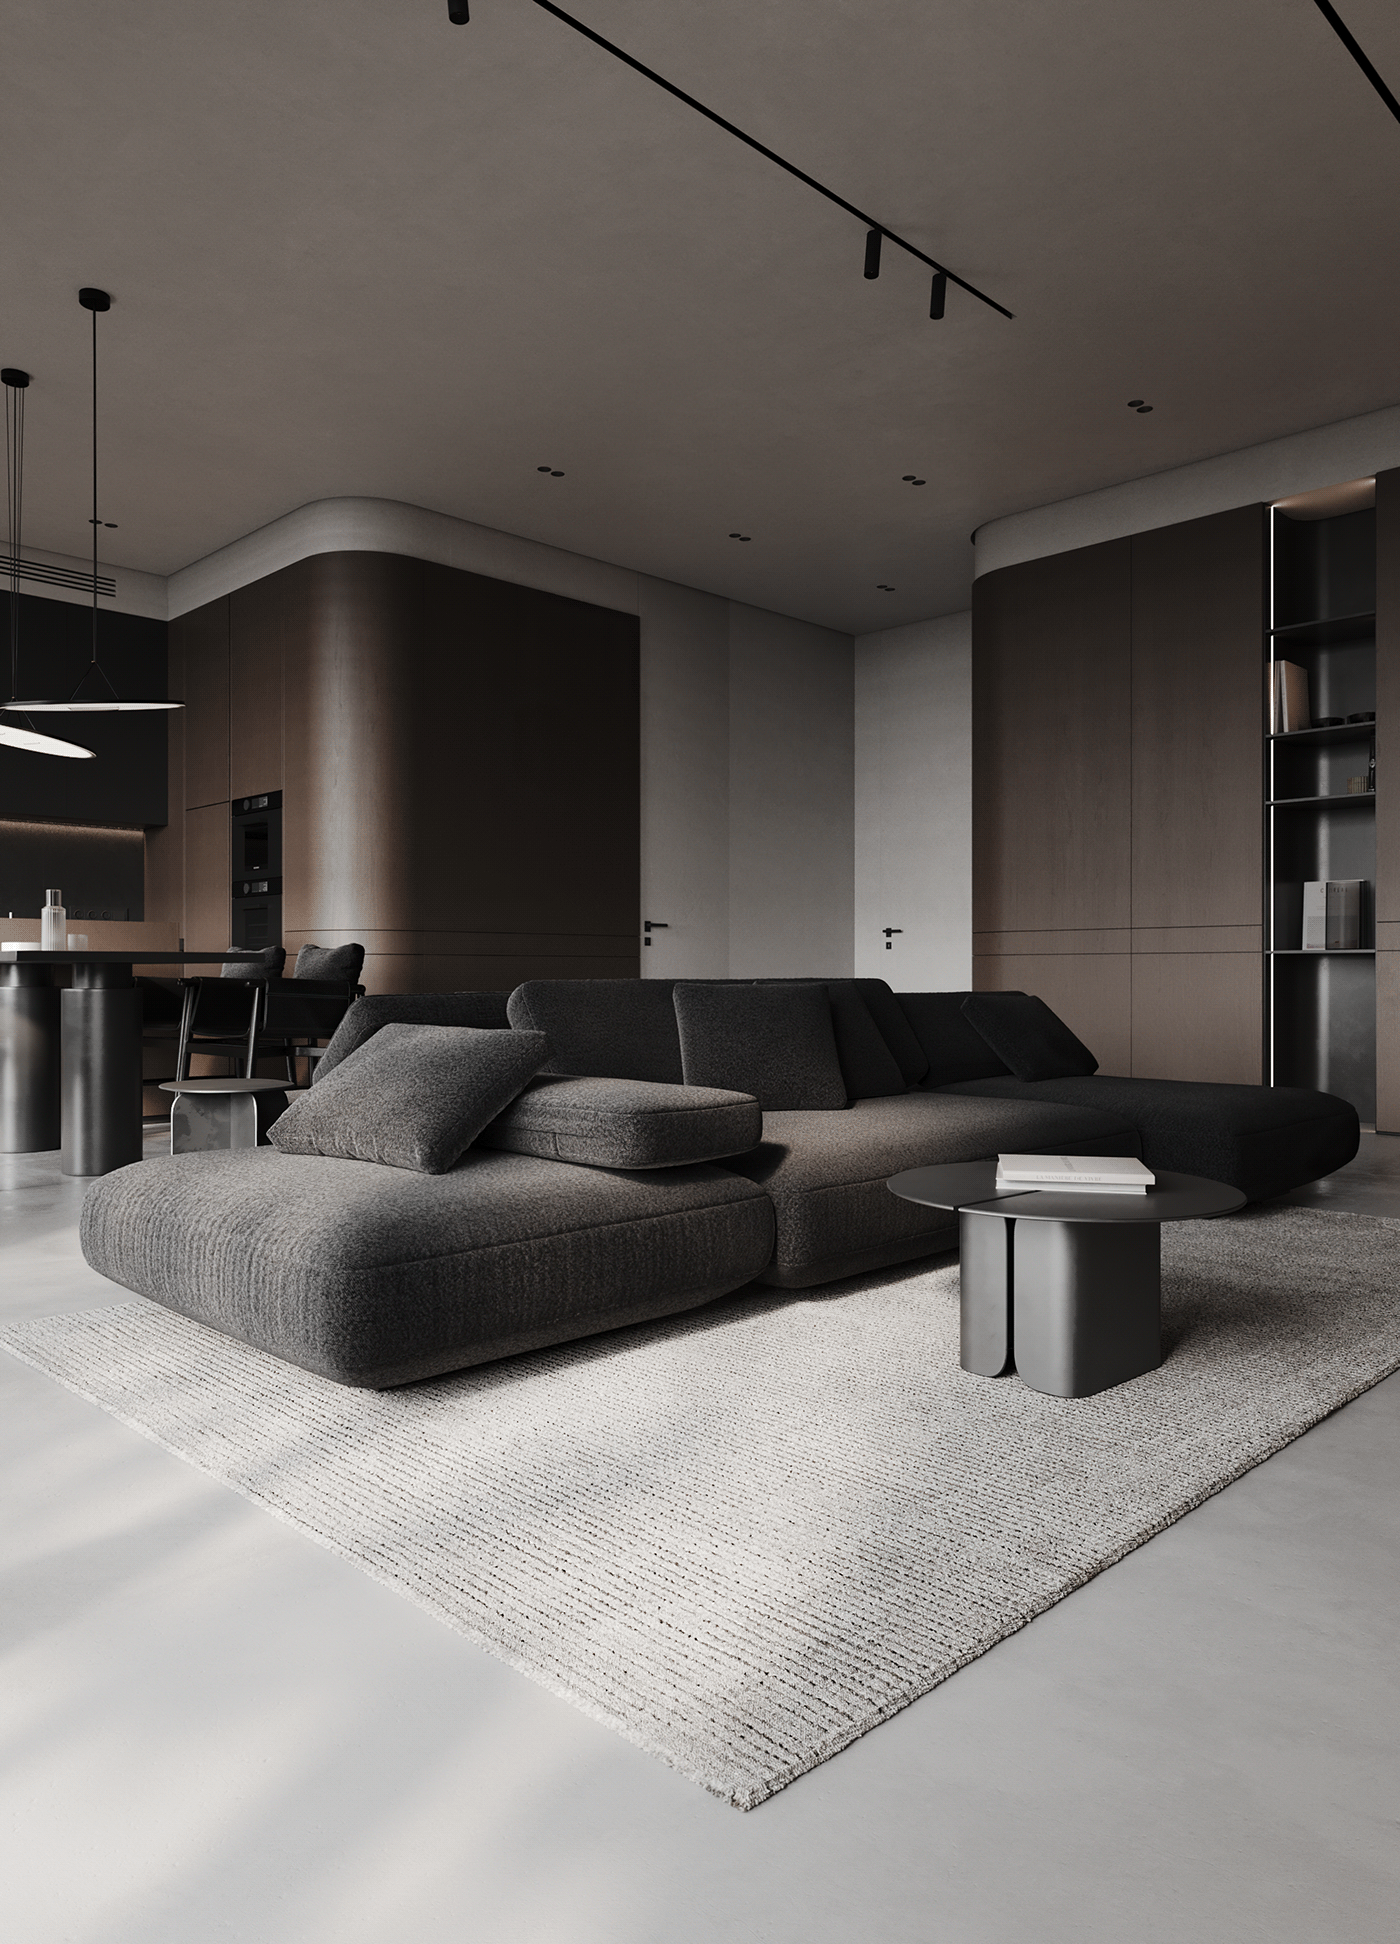 3D 3ds max architecture corona render  interior design  kitchen living room Minimalism Render visualization